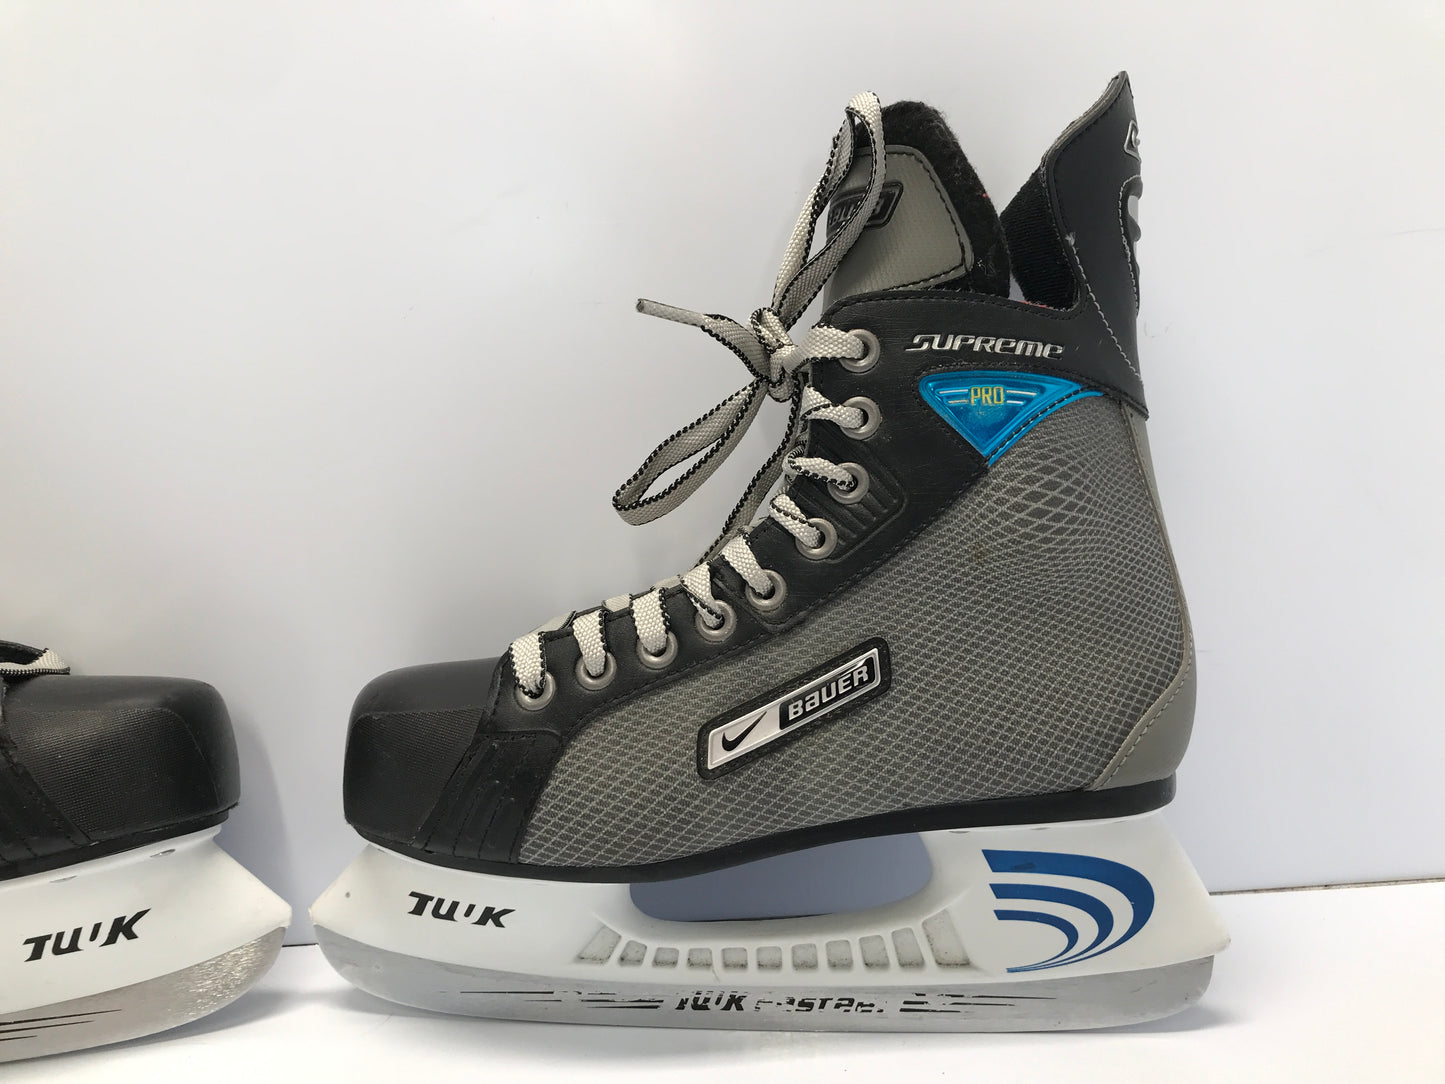 Hockey Skates Men's Size 6 Shoe Size 5 Skate Bauer Supreme Pro Like New